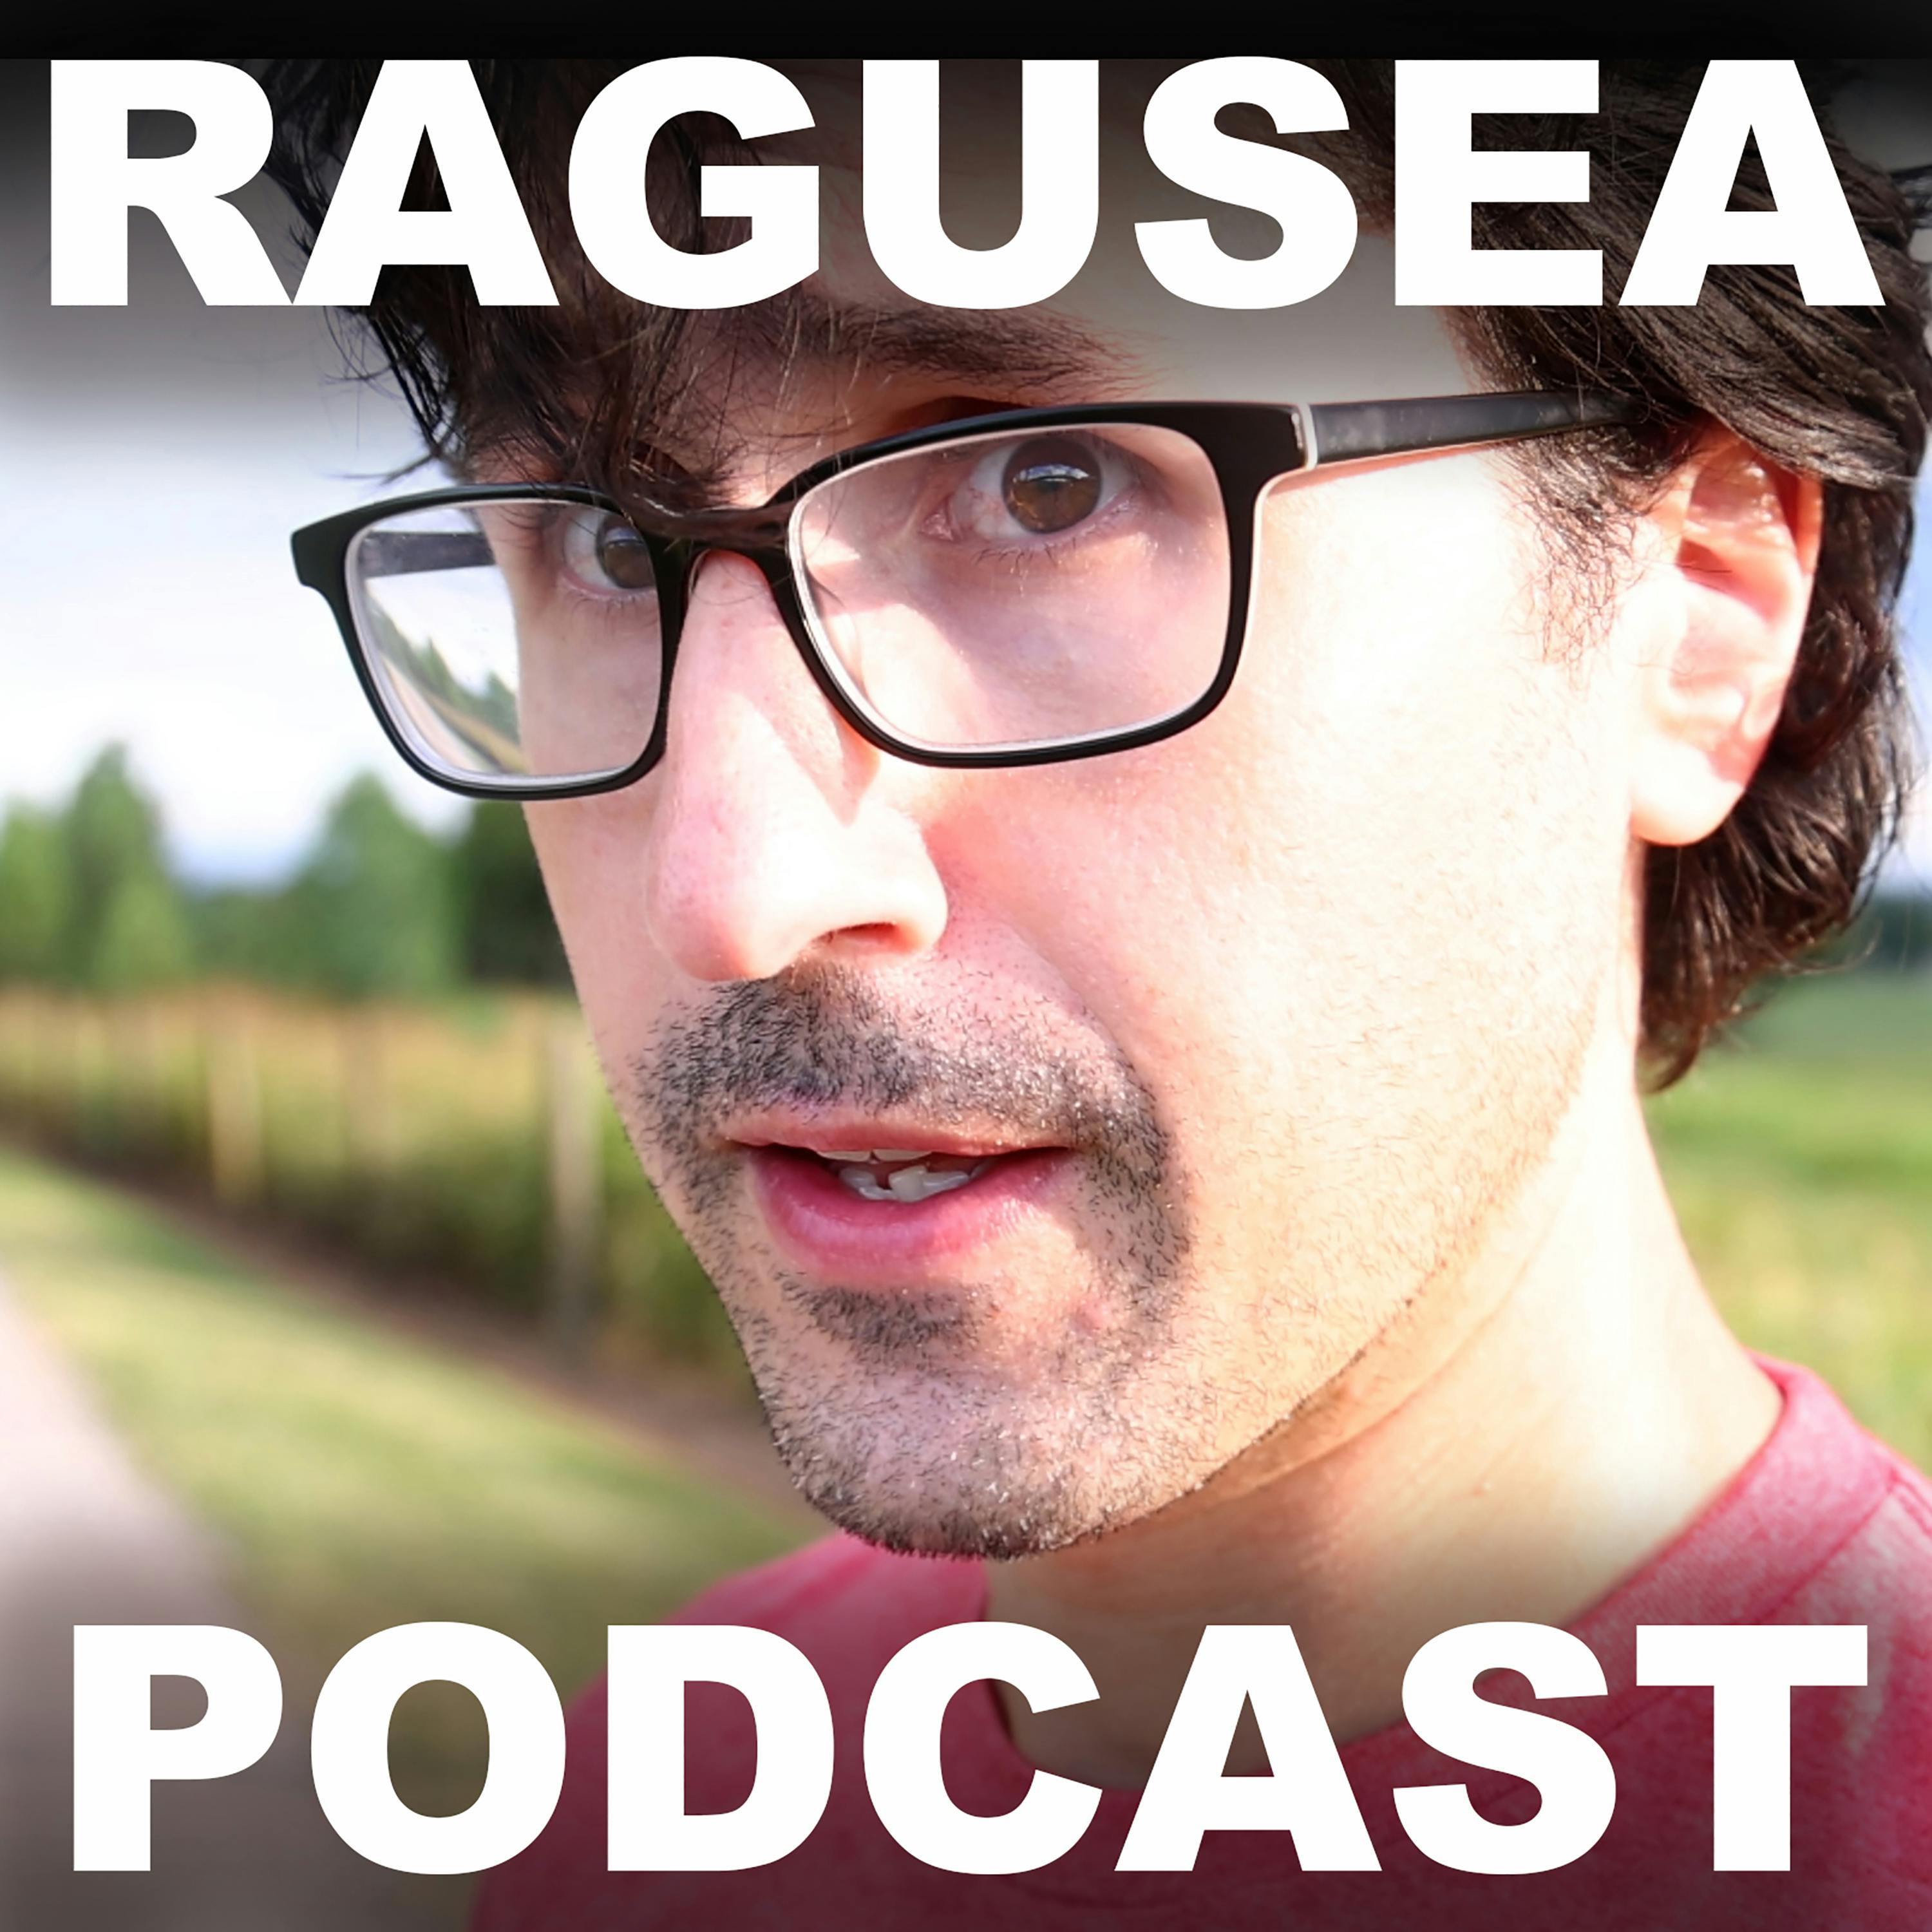 The Adam Ragusea Podcast